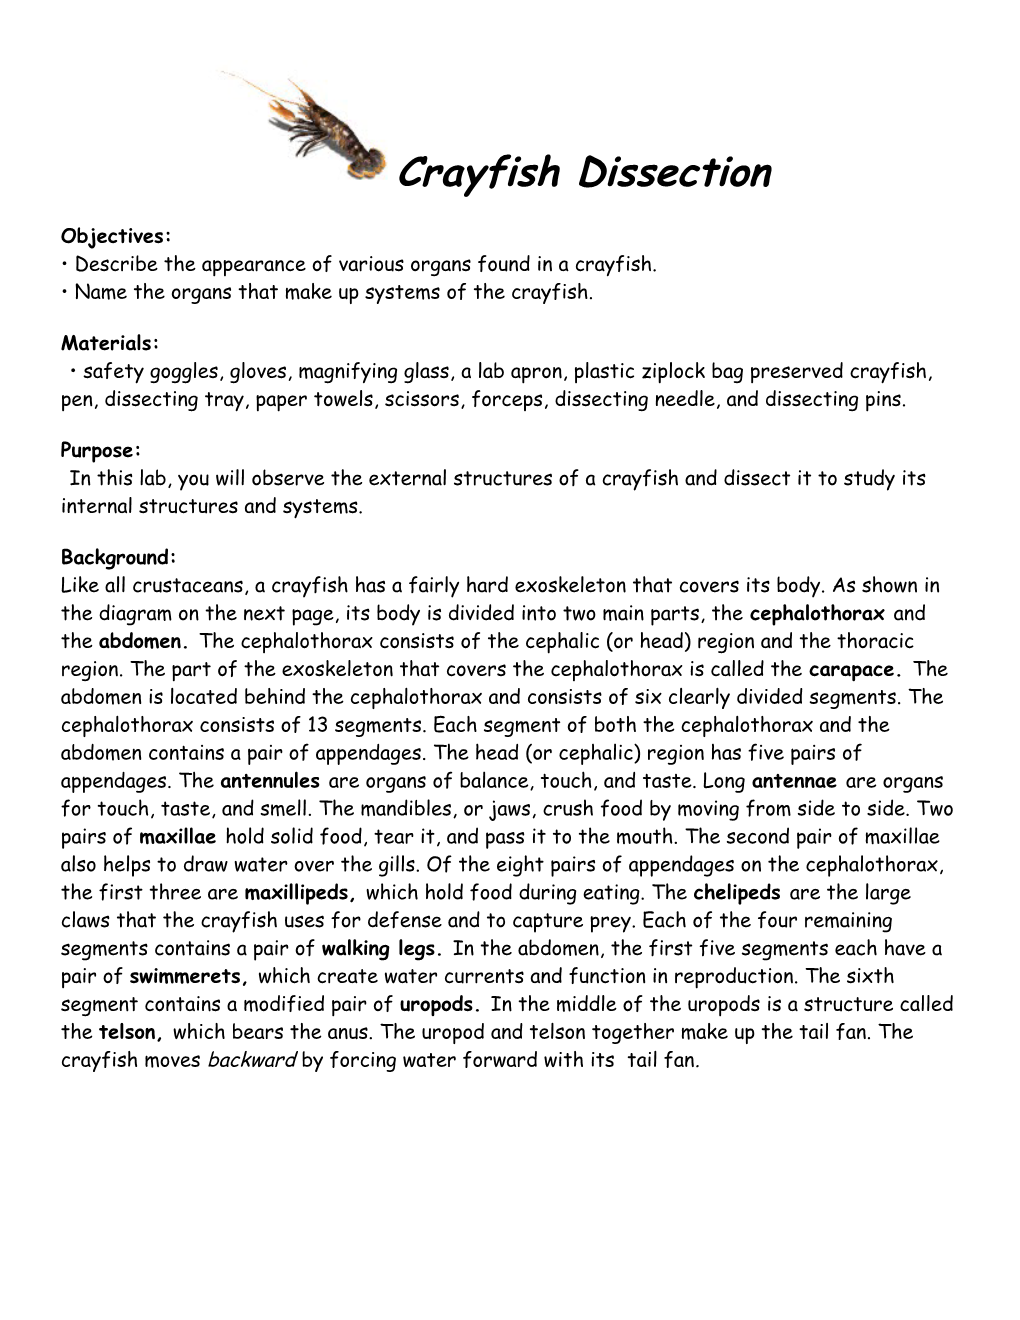 Procedure Part 1 External Anatomy of a Crayfish